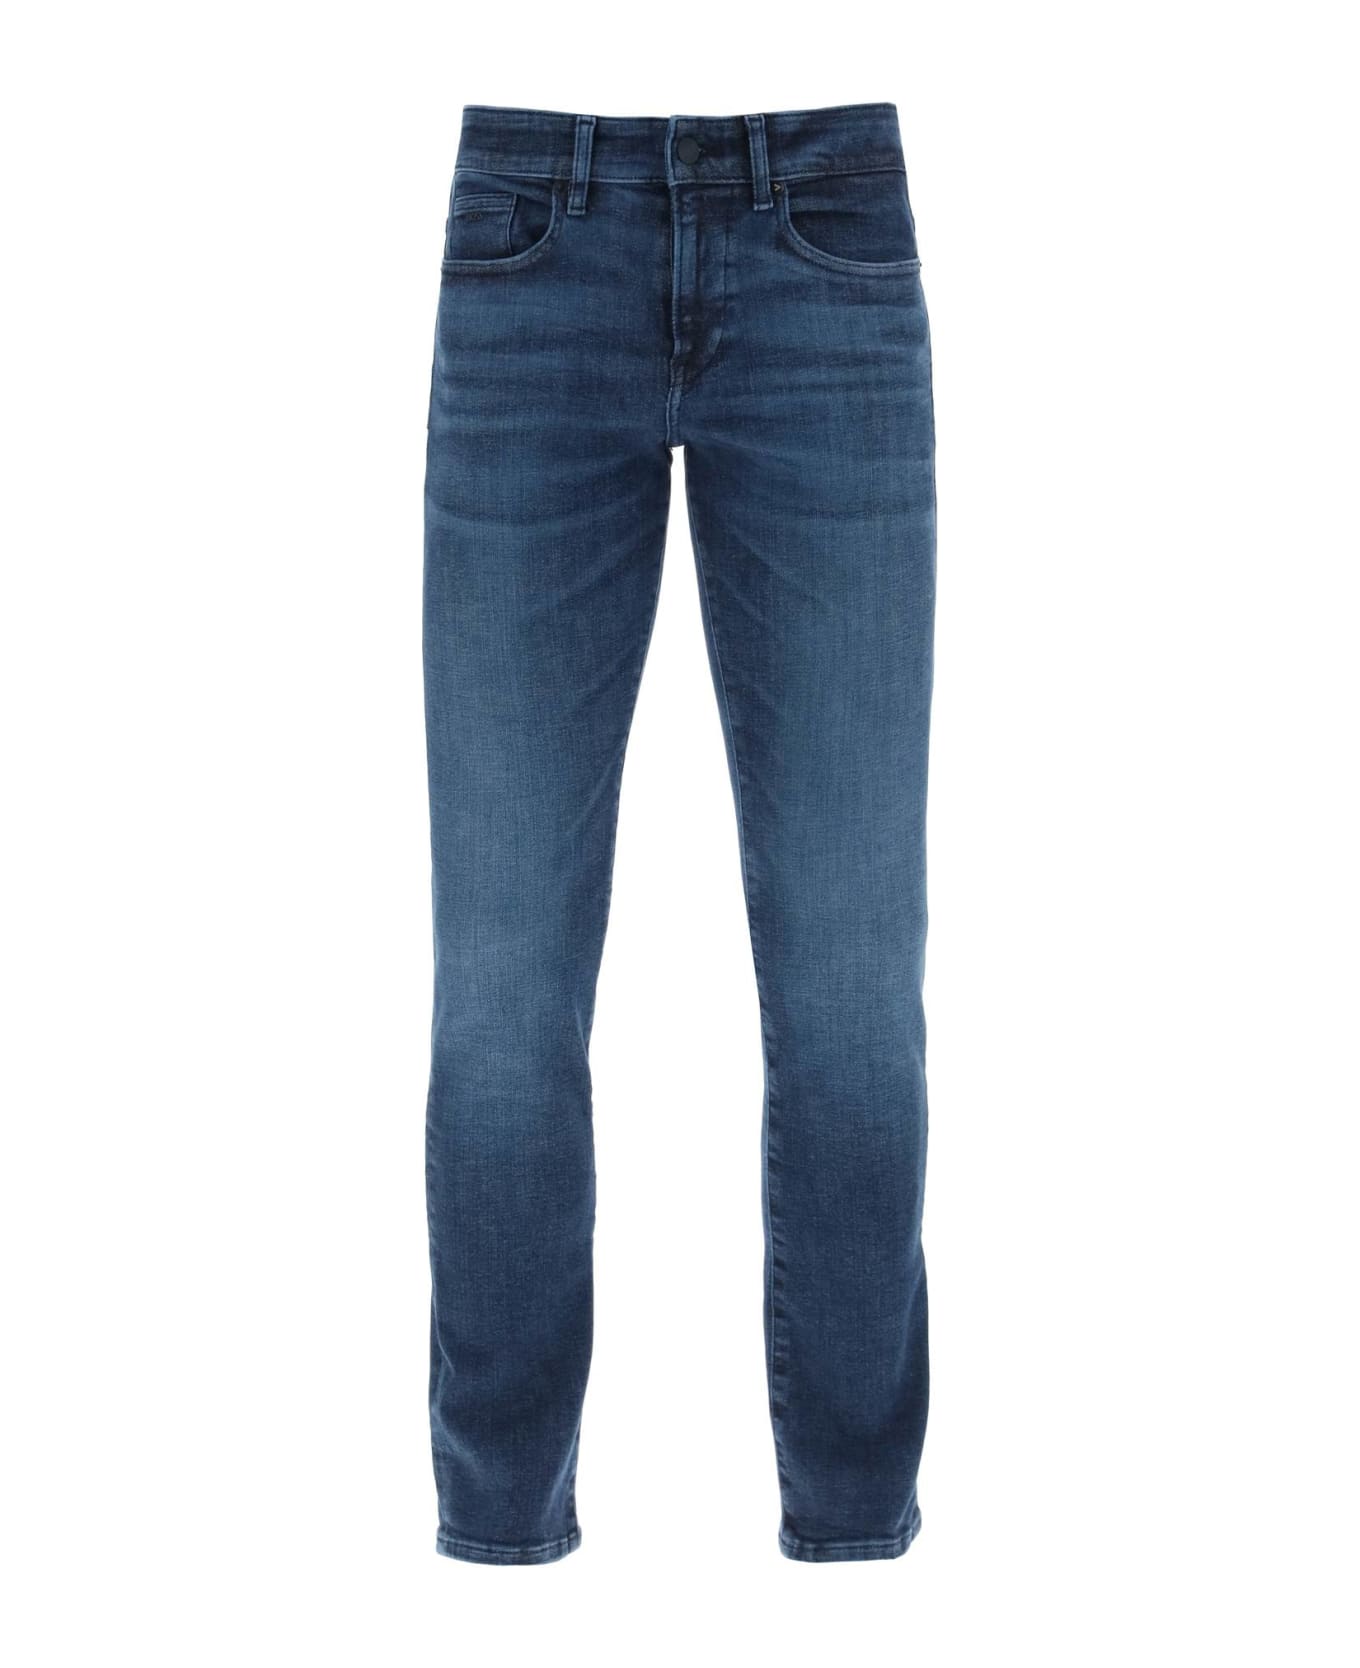 Hugo Boss Delaware Slim Fit Jeans - MEDIUM BLUE (Blue)